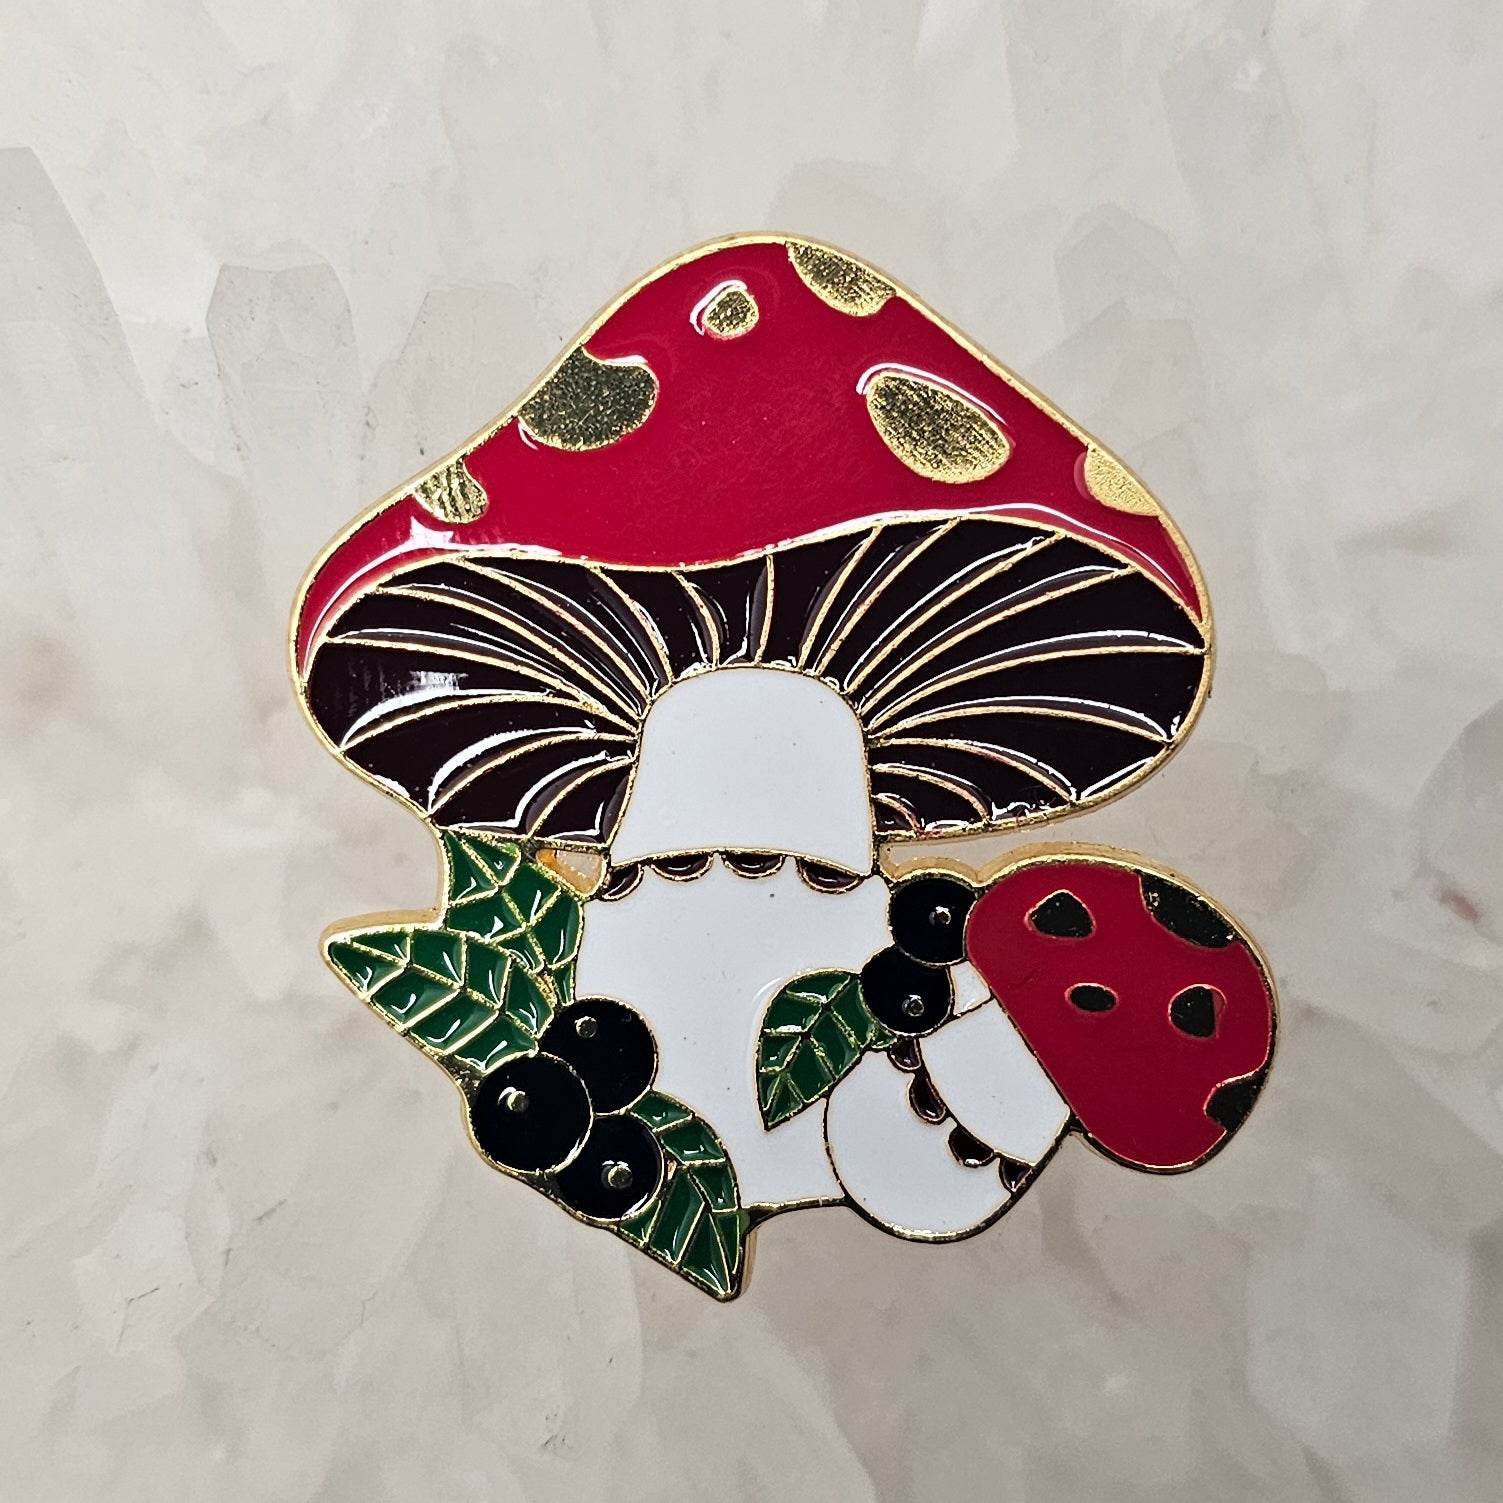 Psychedelic Mushroom Magic Berry Shroom Forager Enamel Pins Hat Pins Lapel Pin Brooch Badge Festival Pin